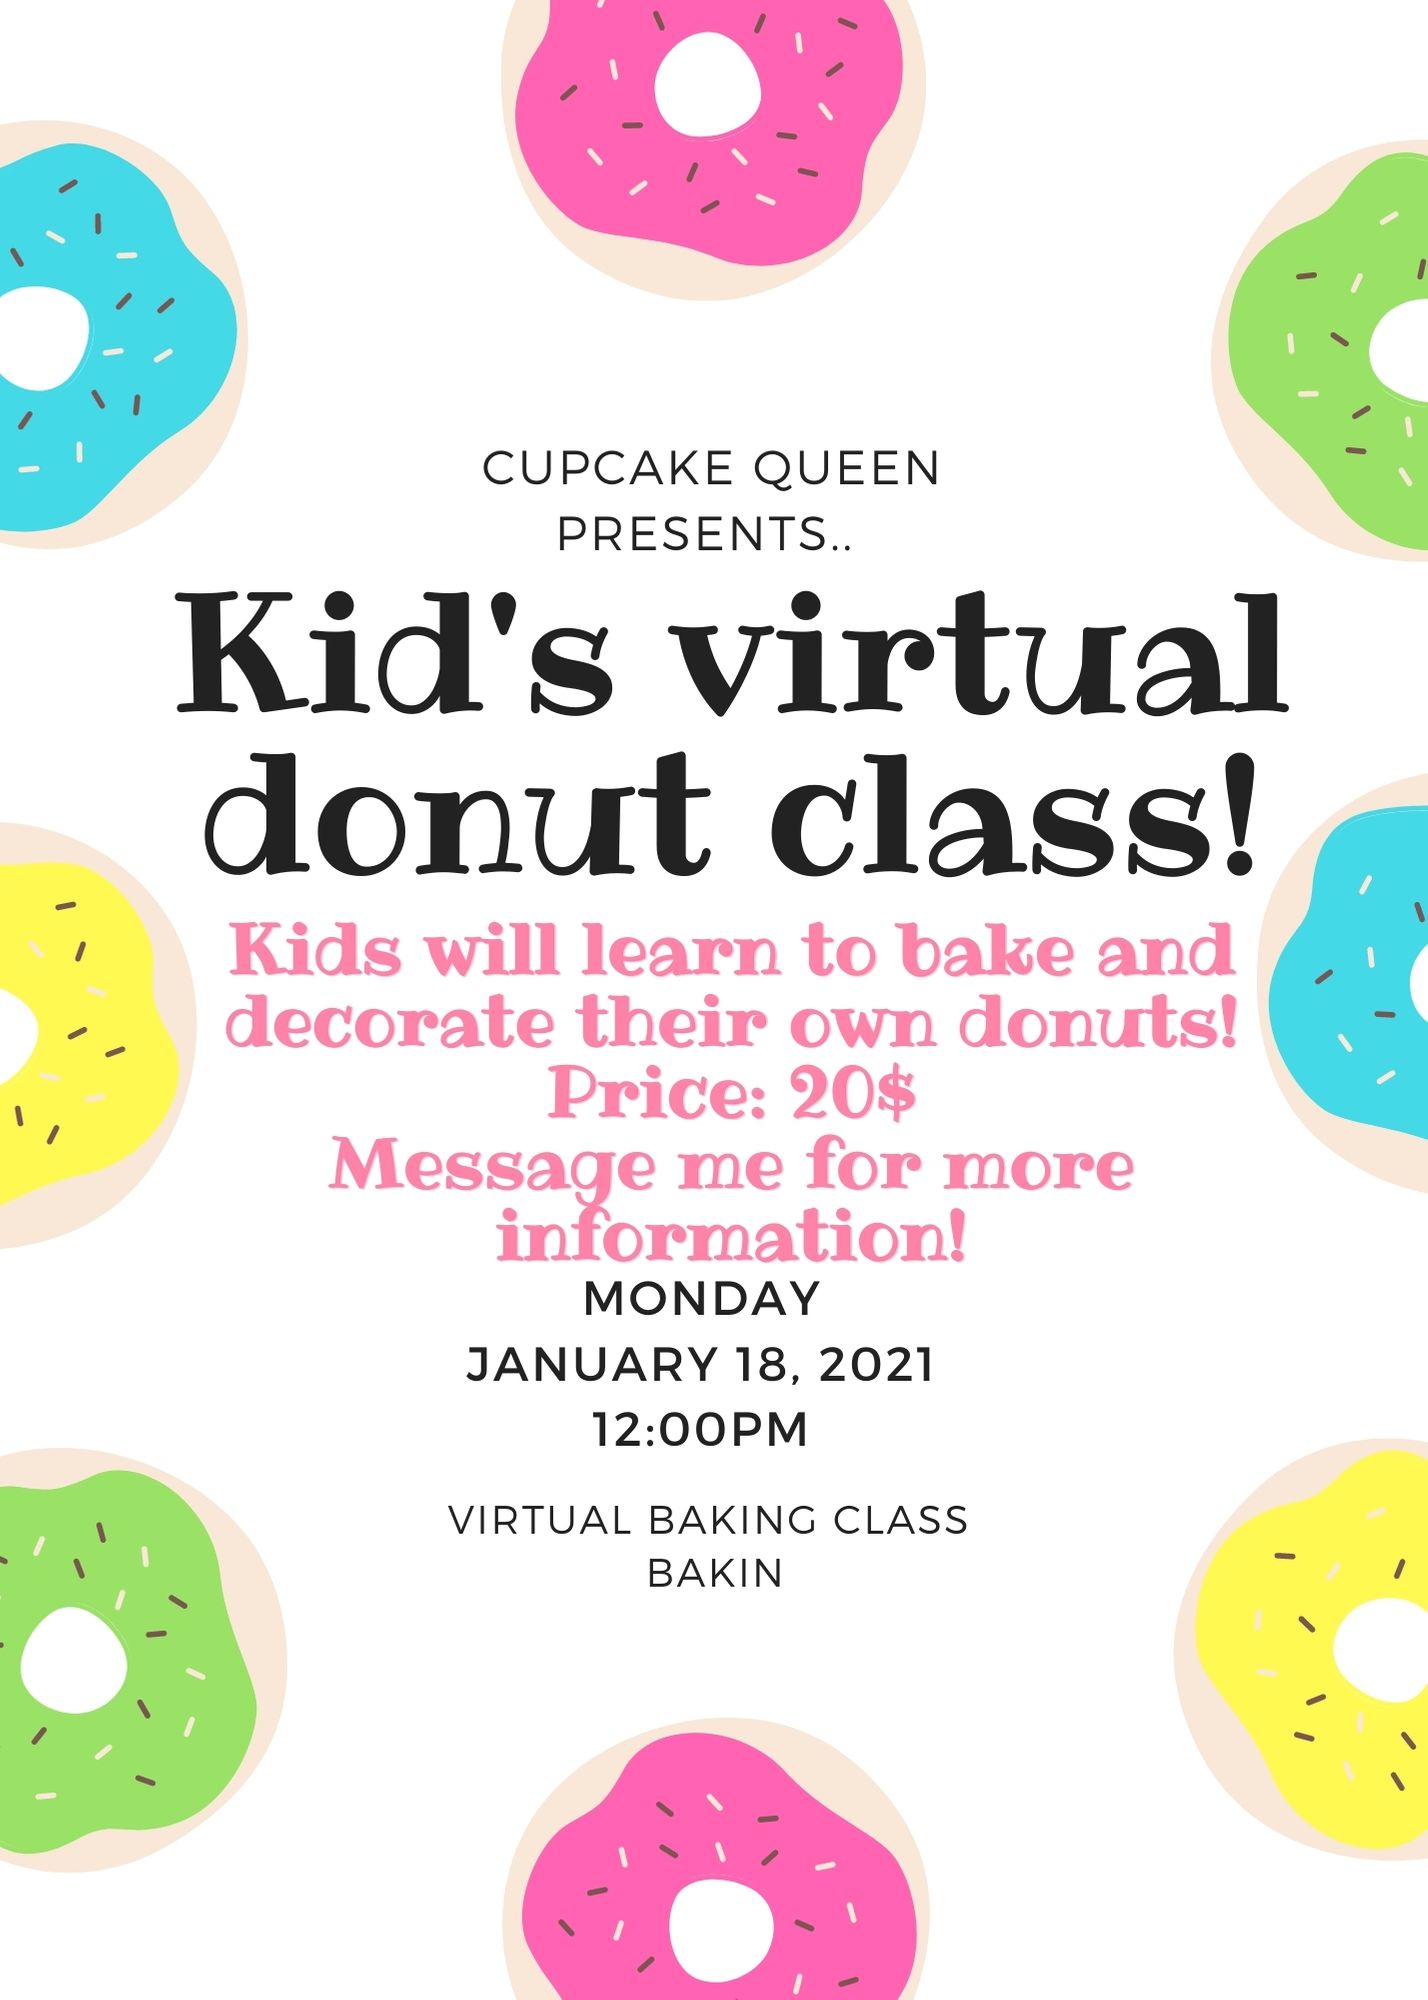 Kid's Virtual Donut Class